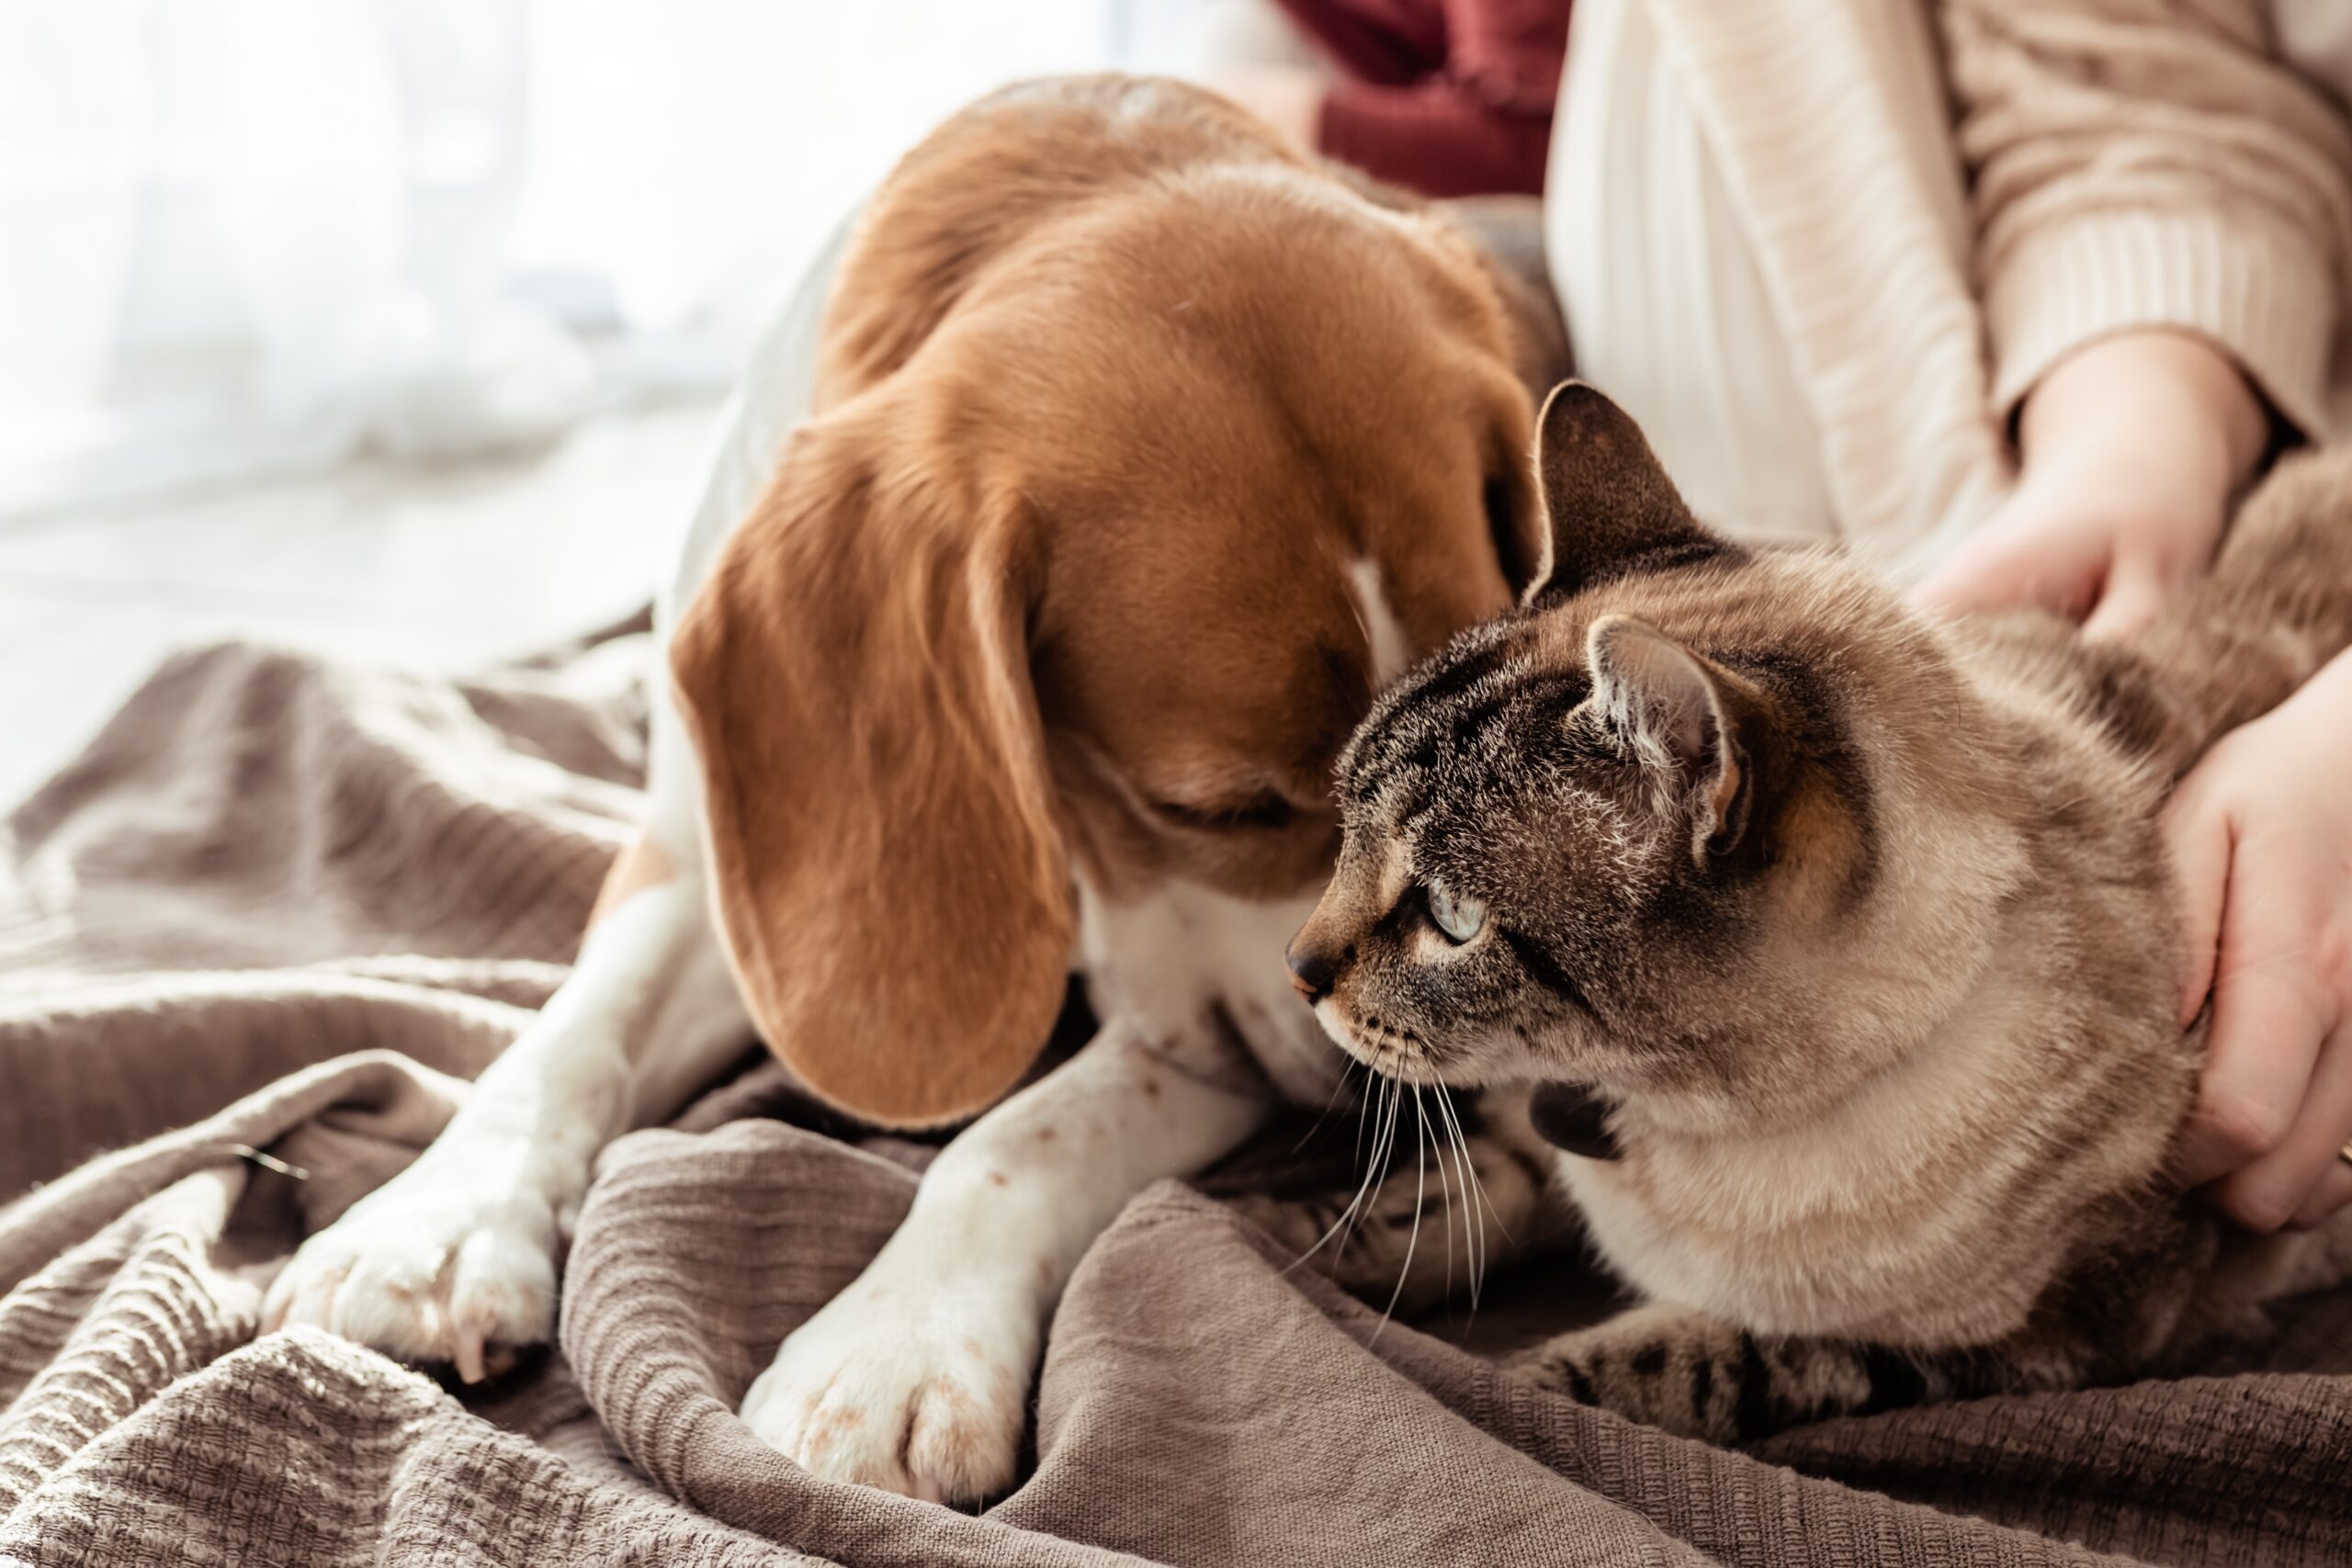 cat-and-dog-friendship-beagle-dog-lying-next-to-h-2022-11-15-18-06-31-utc